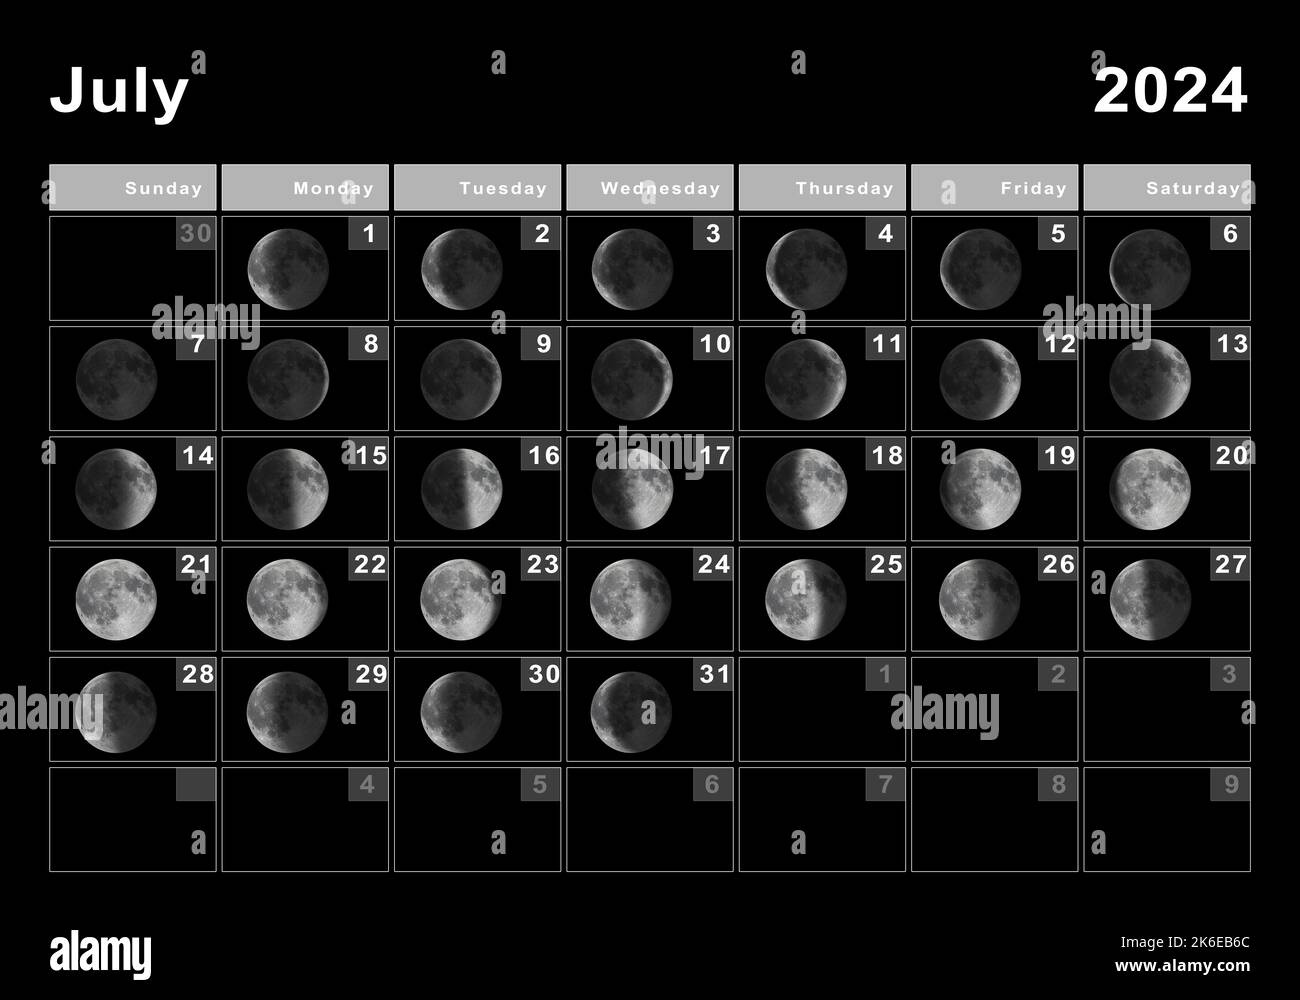 July 2024 Lunar Calendar, Moon Cycles, Moon Phases Stock Photo - Alamy with regard to July 19 Lunar Calendar 2024